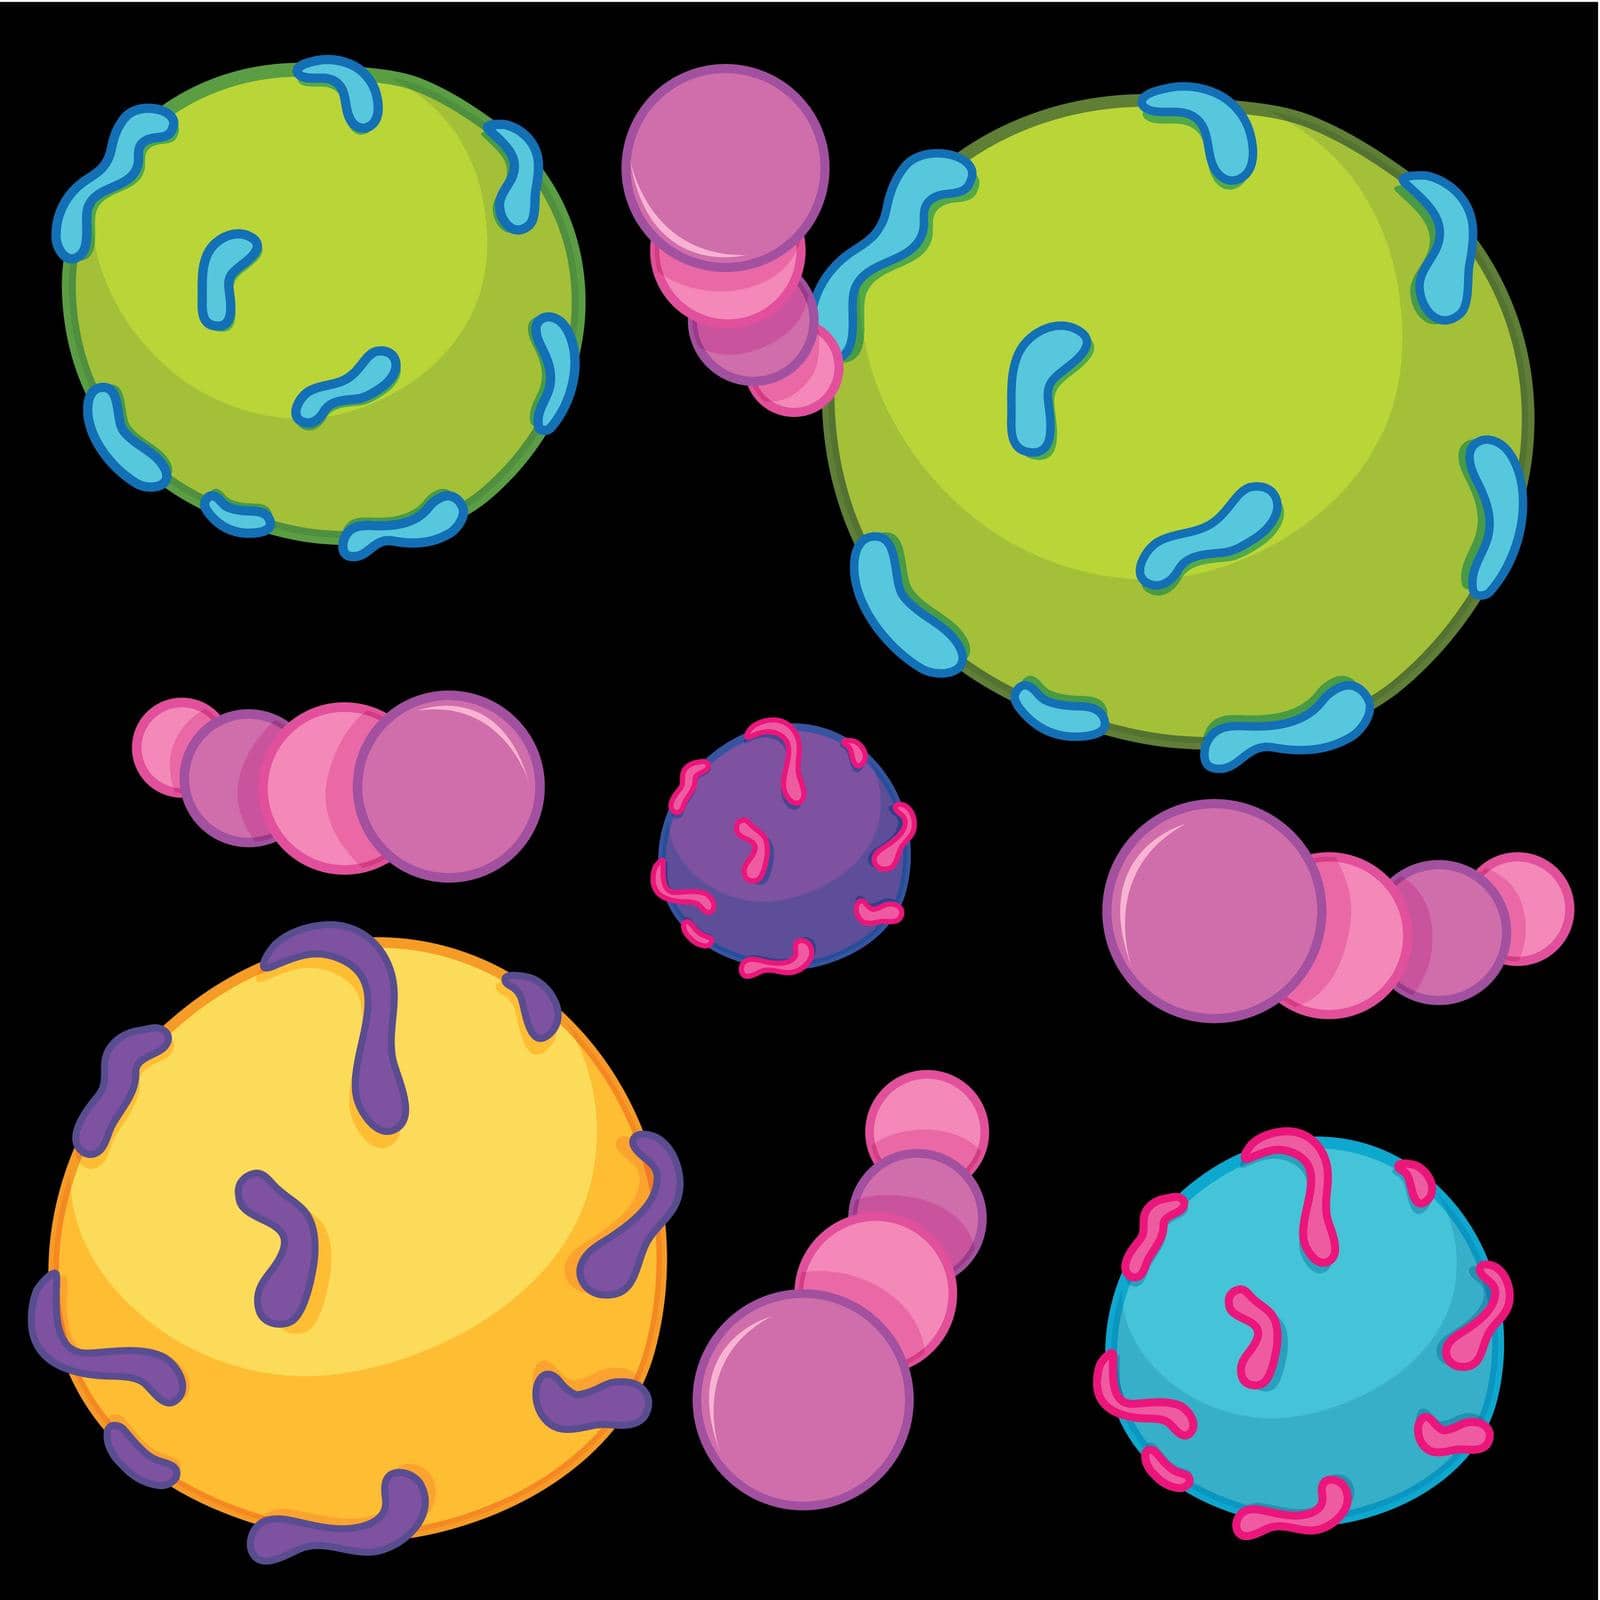 Close up round bacteria illustration